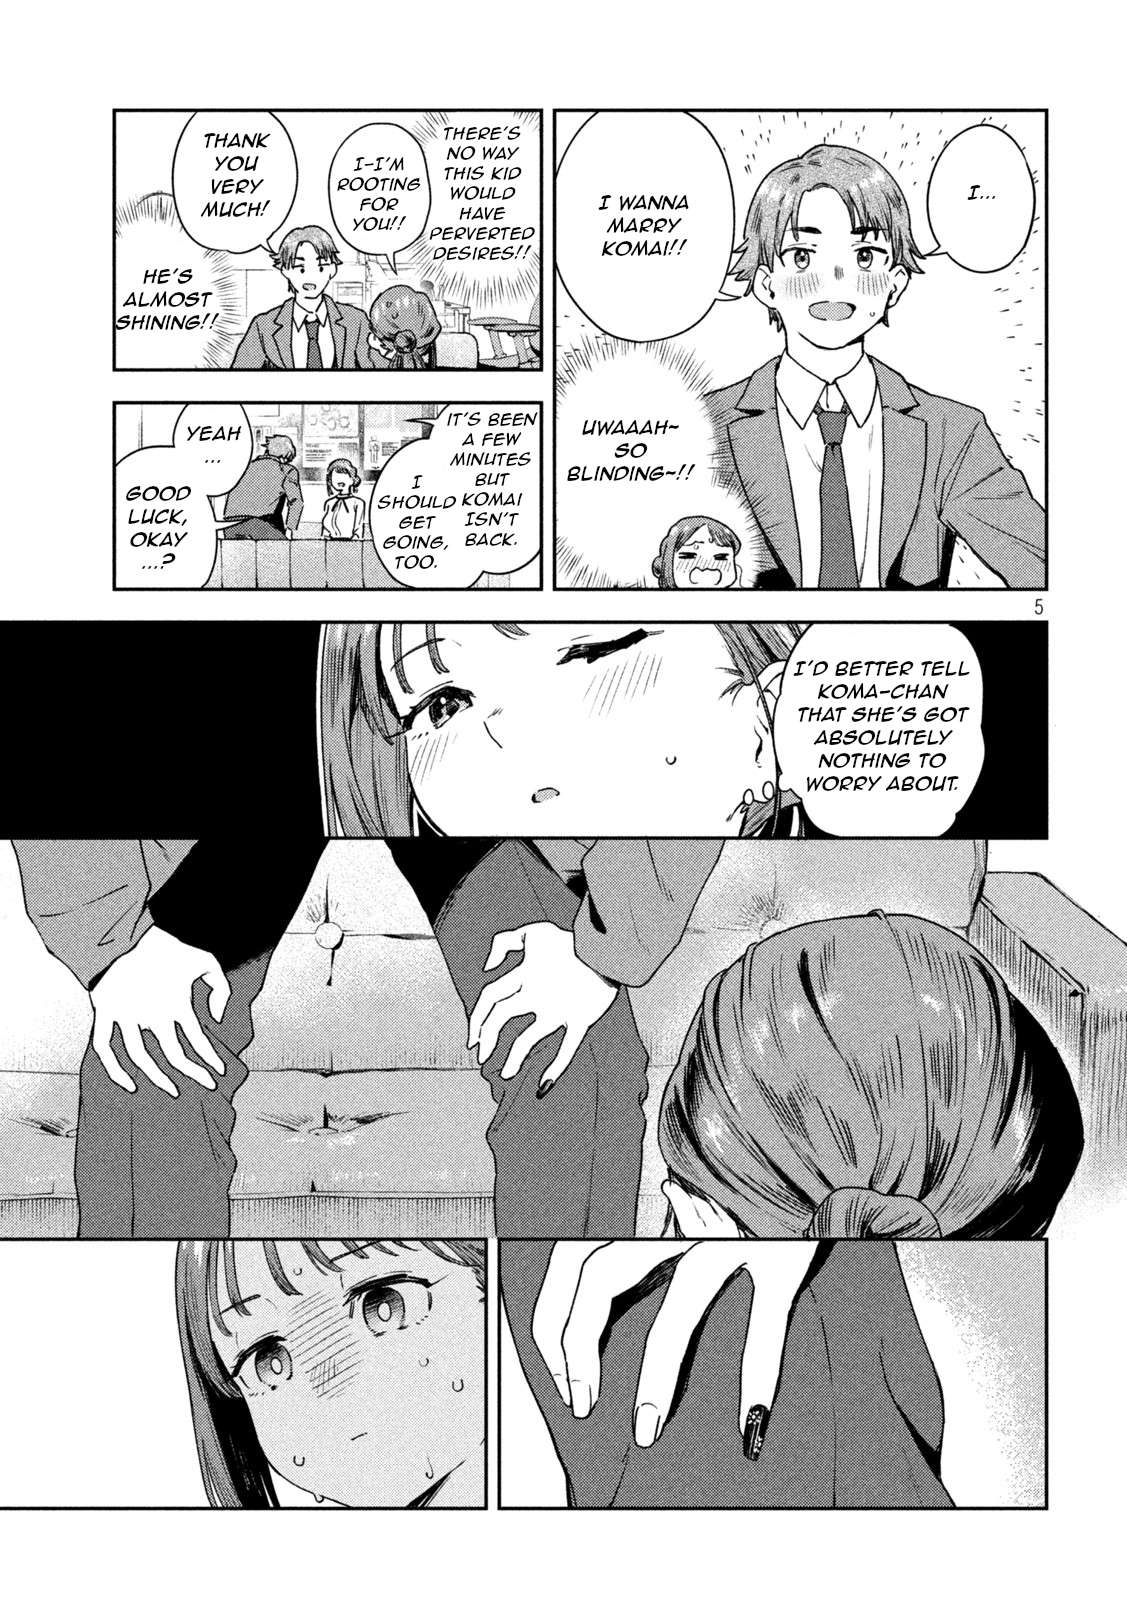 Miyo-Chan Sensei Said So - chapter 7 - #5